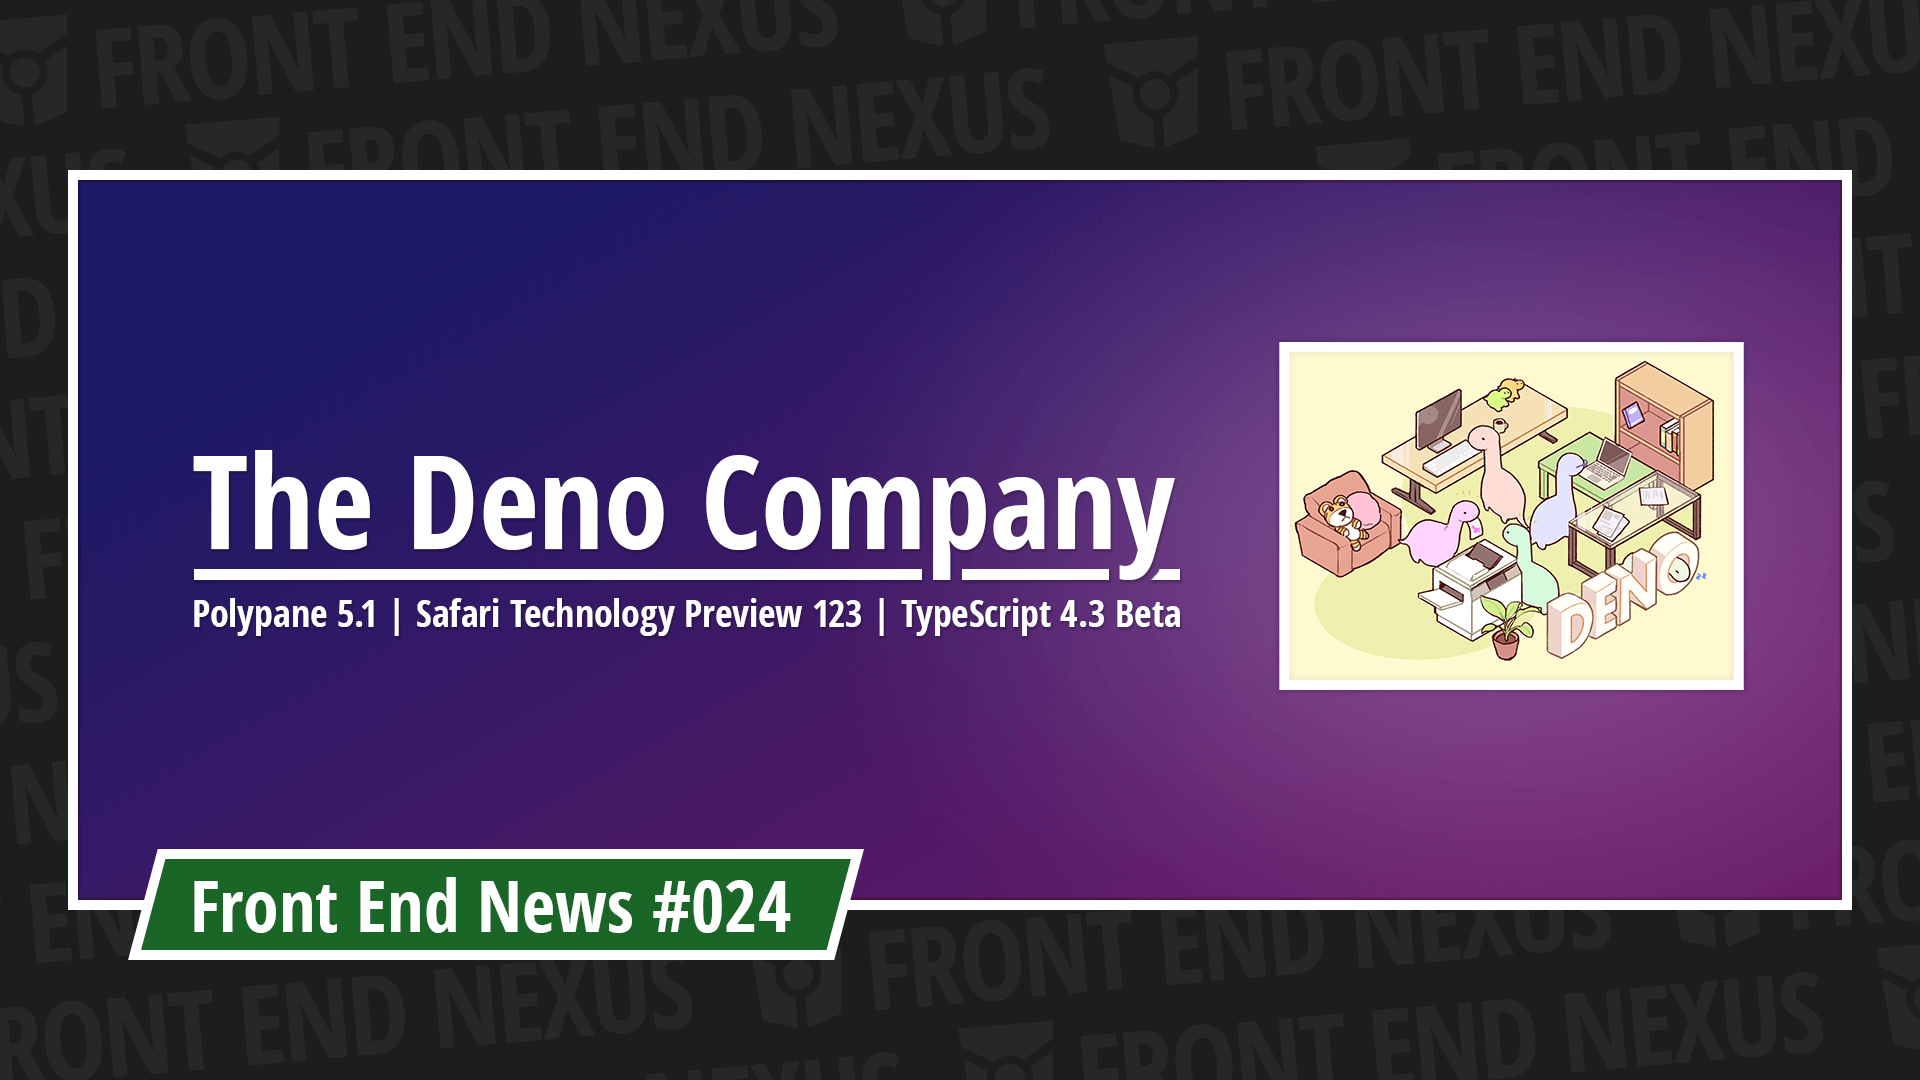 Announcing the Deno Company, Polypane 5.1, Safari Technology Preview 123, and TypeScript 4.3 Beta | Front End News #024